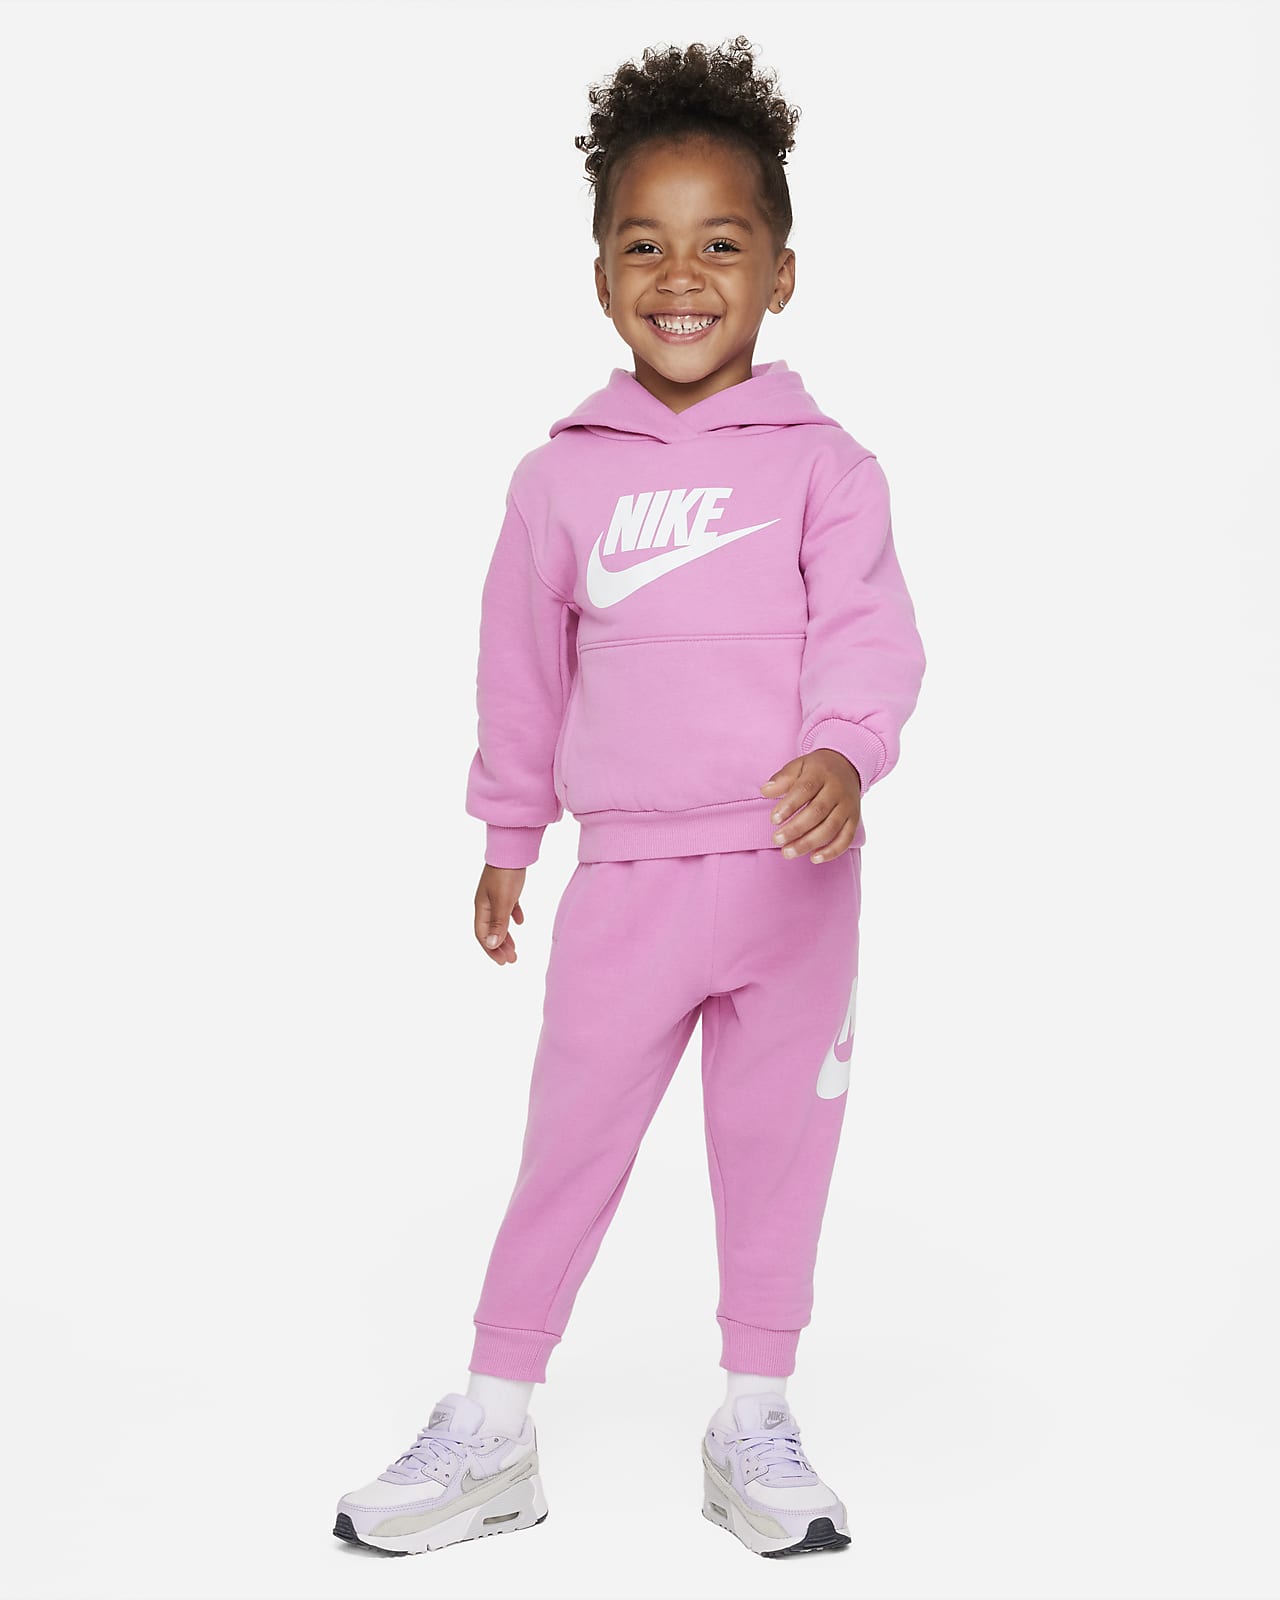 Toddler Hoodie. Fleece Club Nike Sportswear Pullover